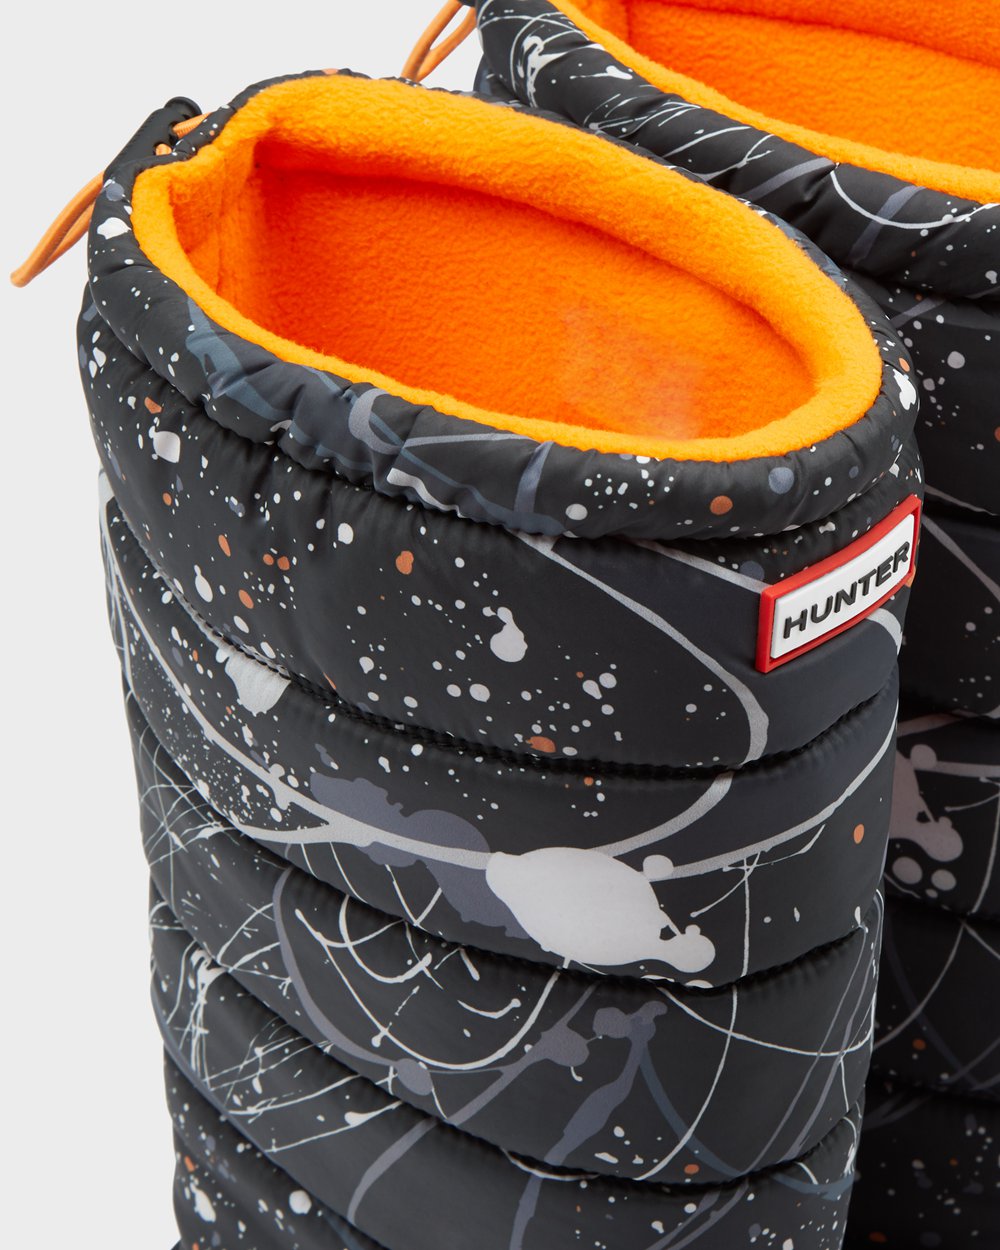 Womens Snow Boots - Hunter Original Printed Insulated Tall (52WSXFBHD) - Grey Black